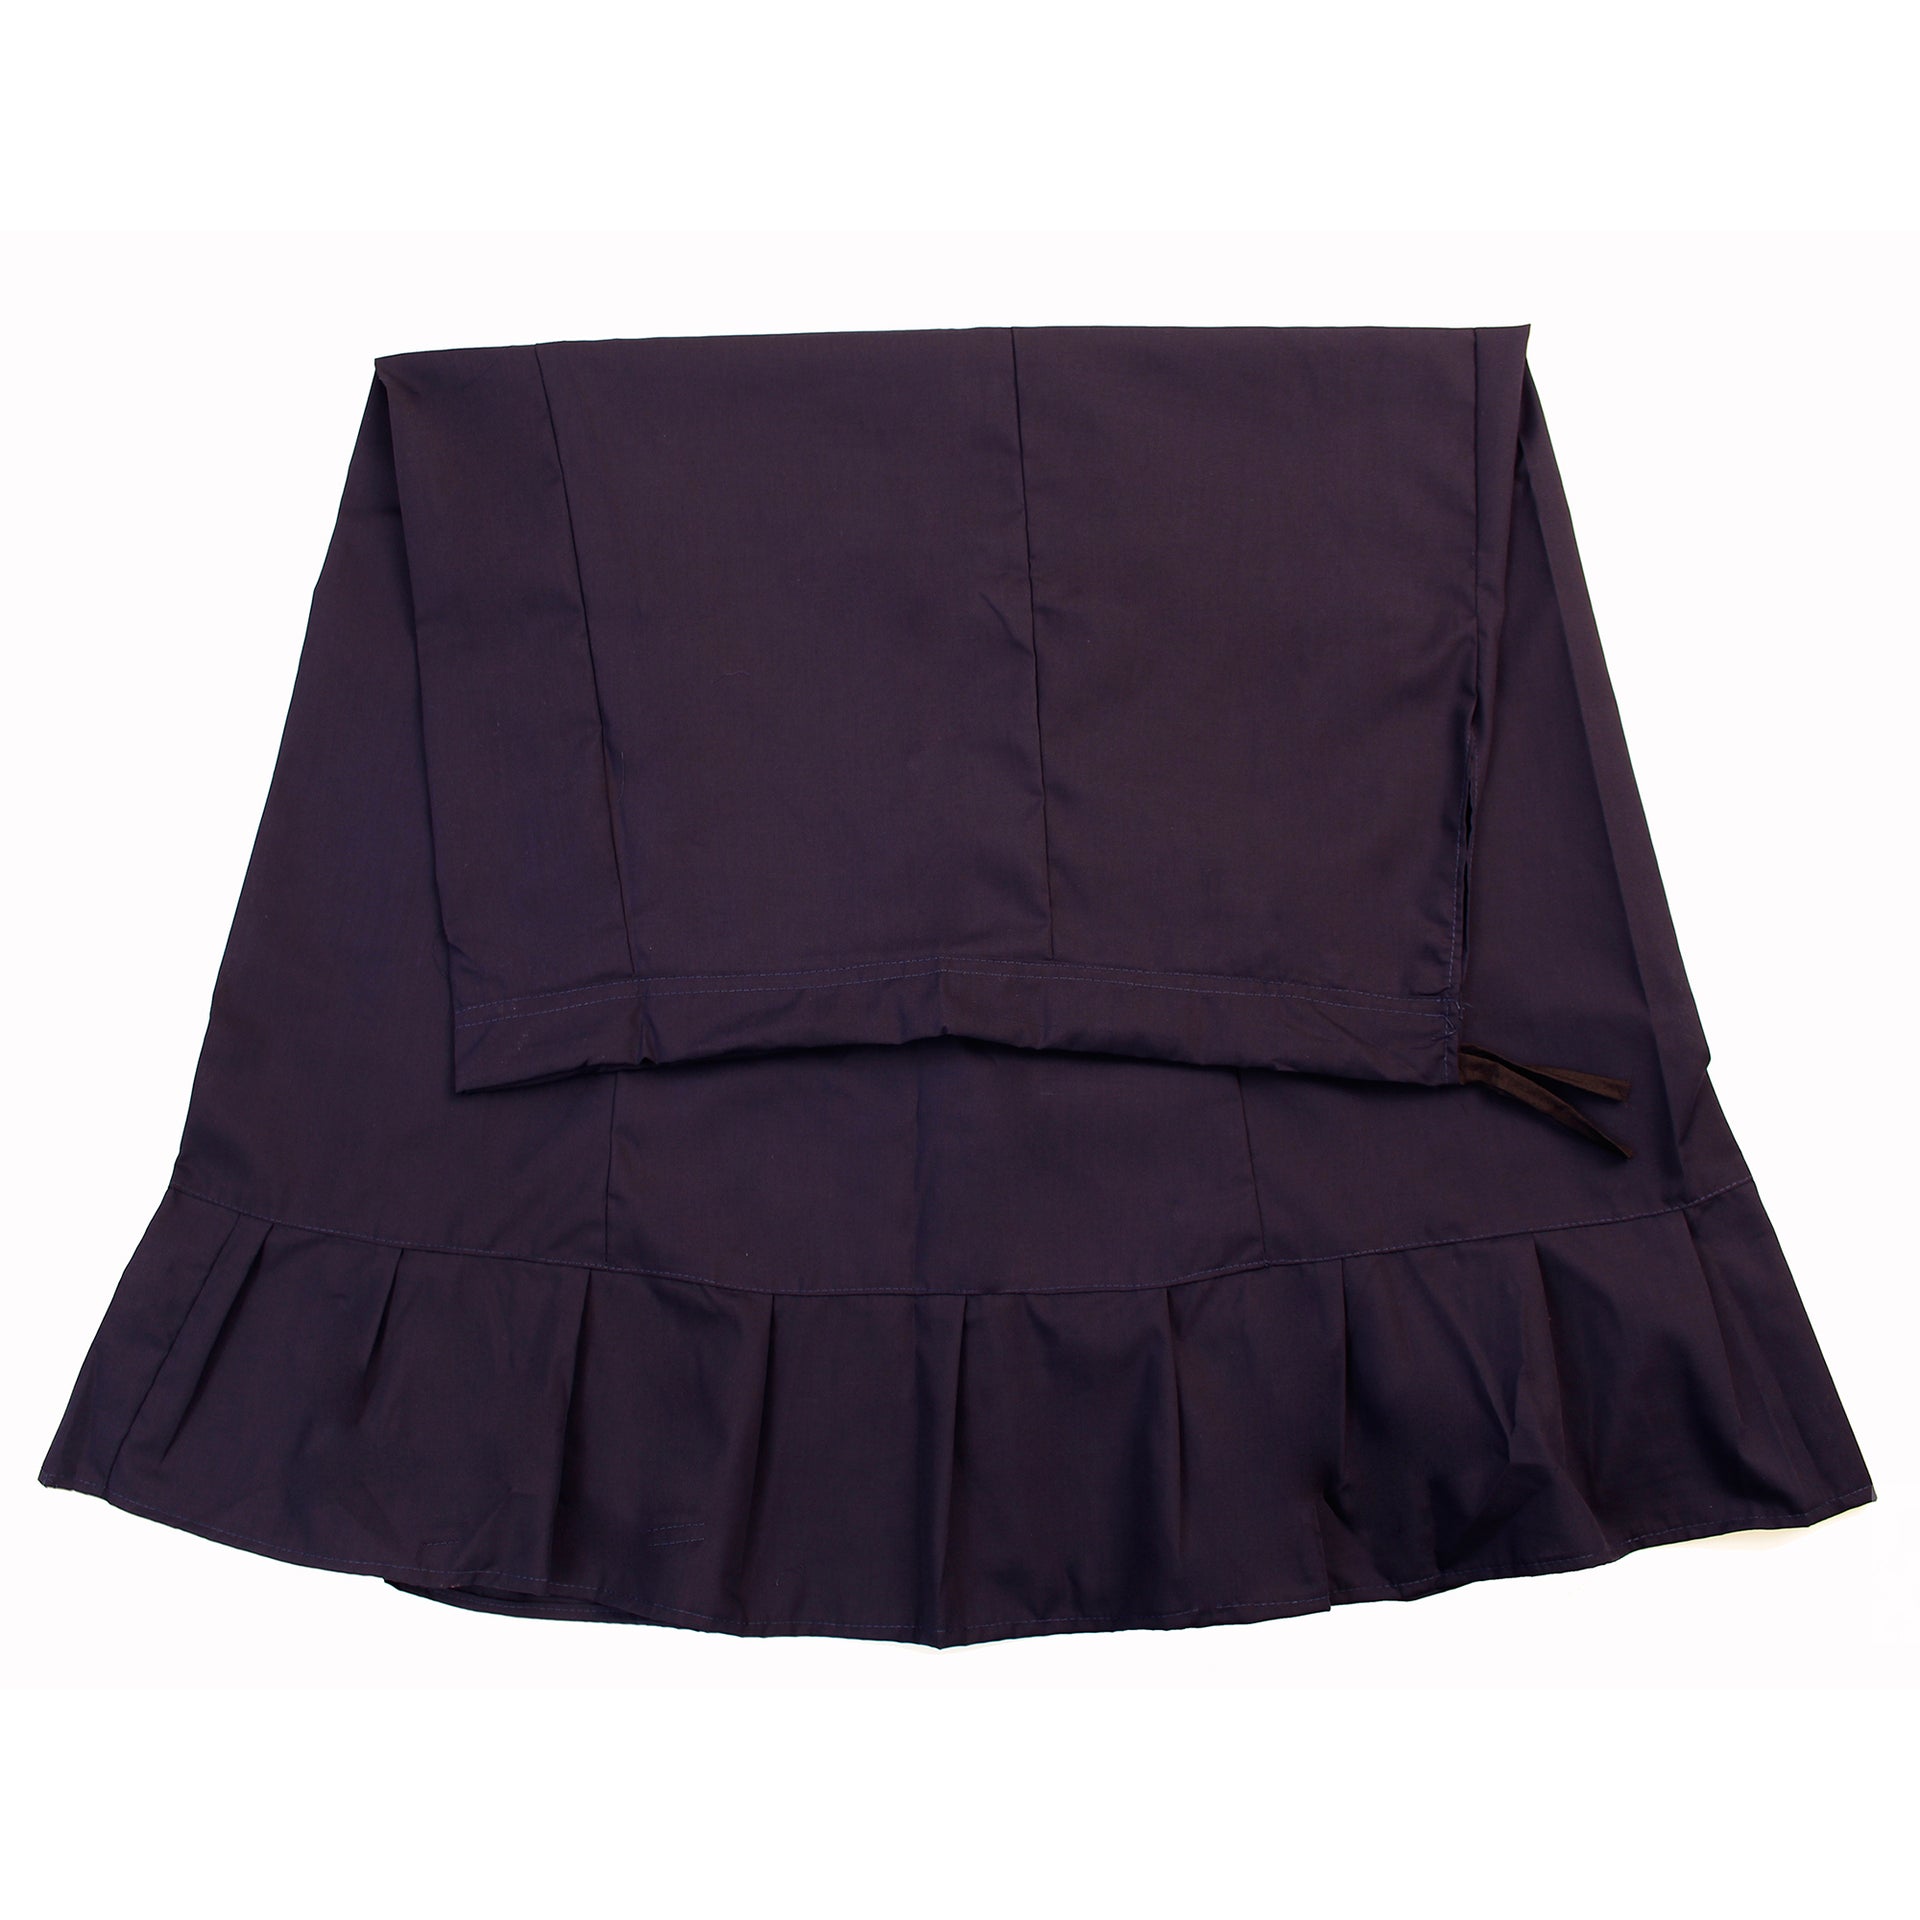 Blue - Sari (Saree) Petticoat - Available in S, M, L & XL - Underskirt